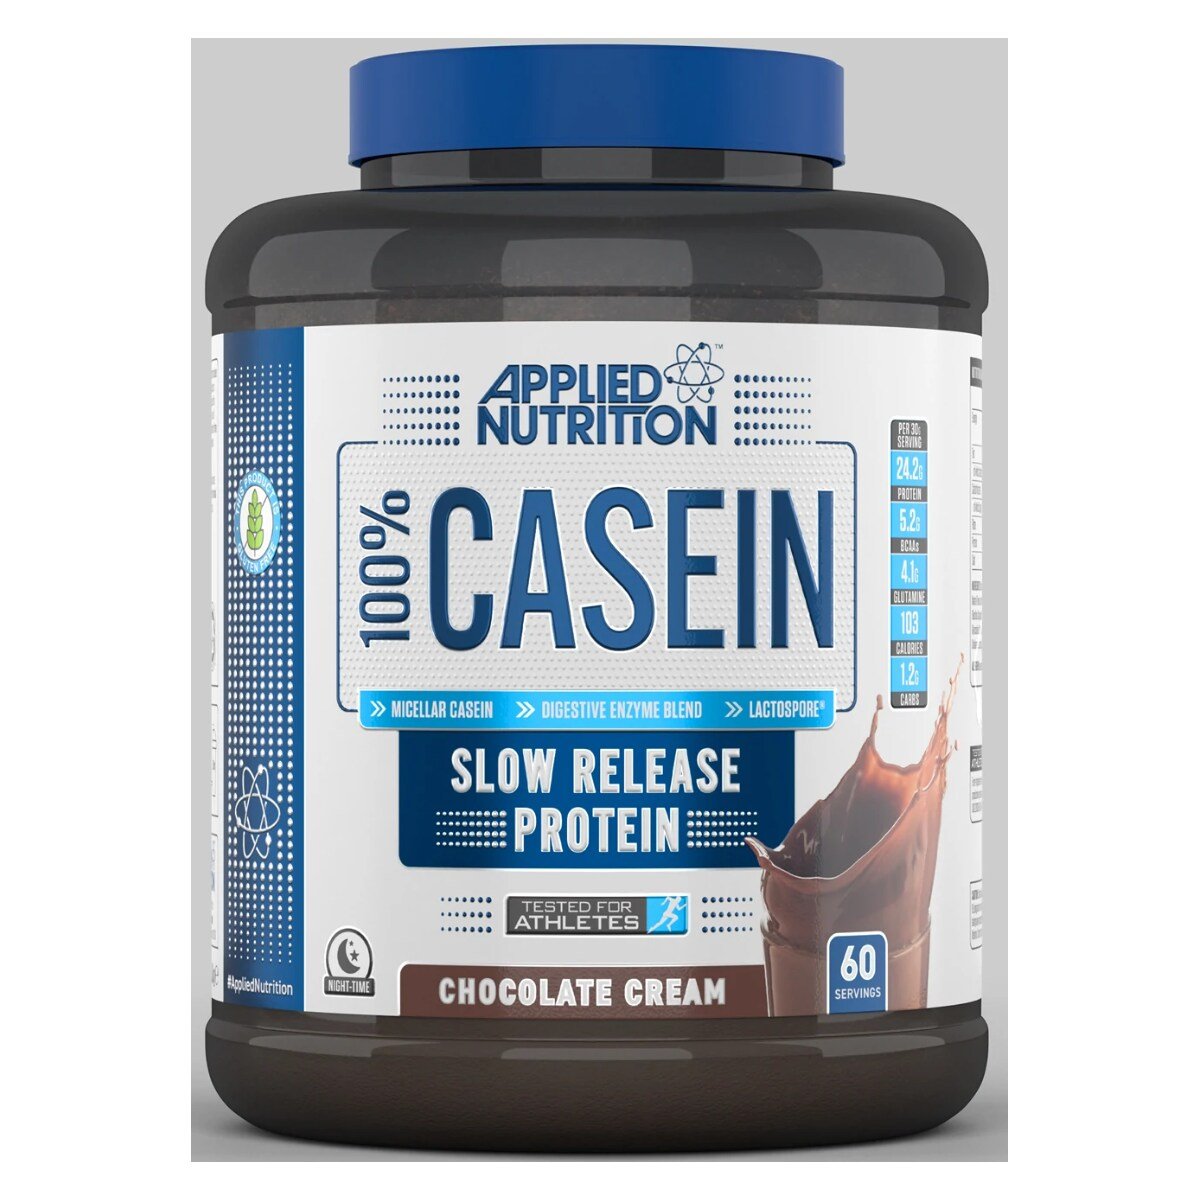 Applied Nutrition 100% Casein - MRM-BODY